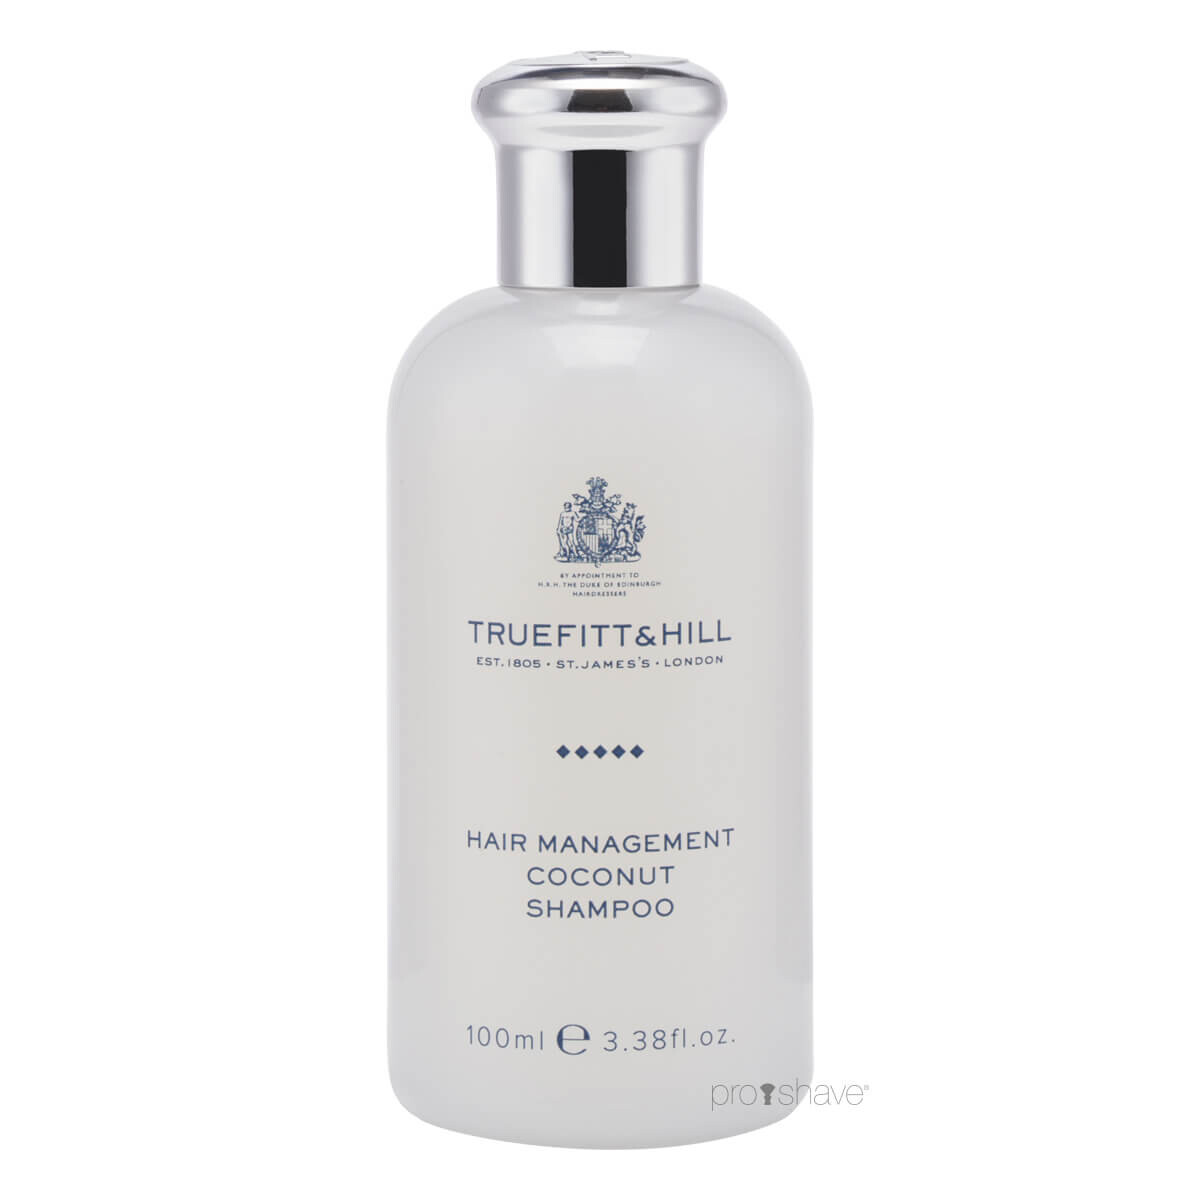 Truefitt & Hill Coconut Shampoo, 100 ml.